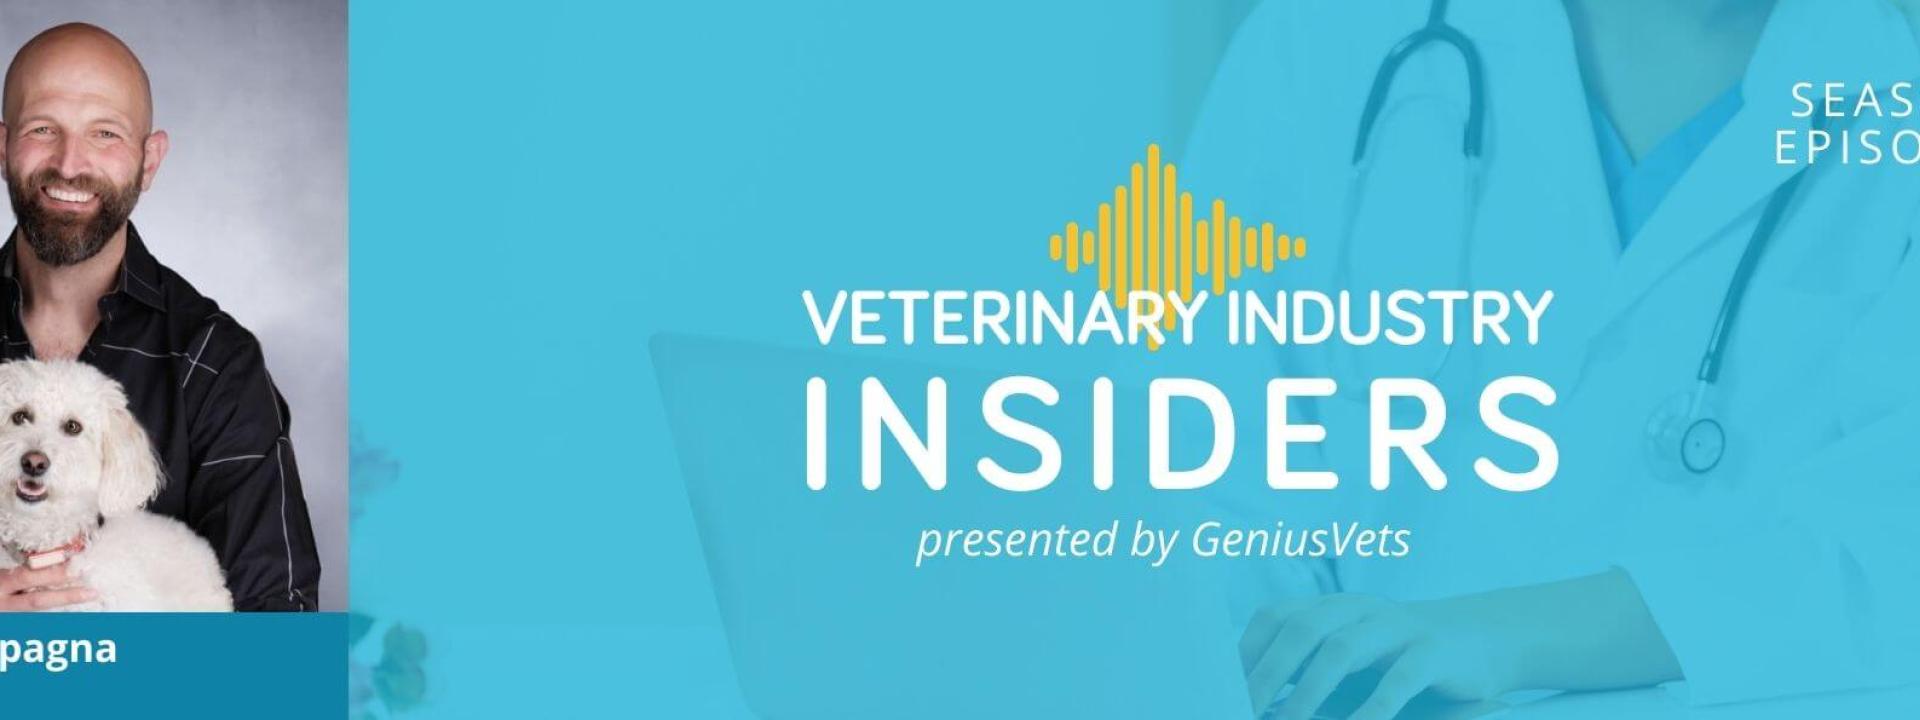 Veterinary Industry Insiders: Joey Campagna